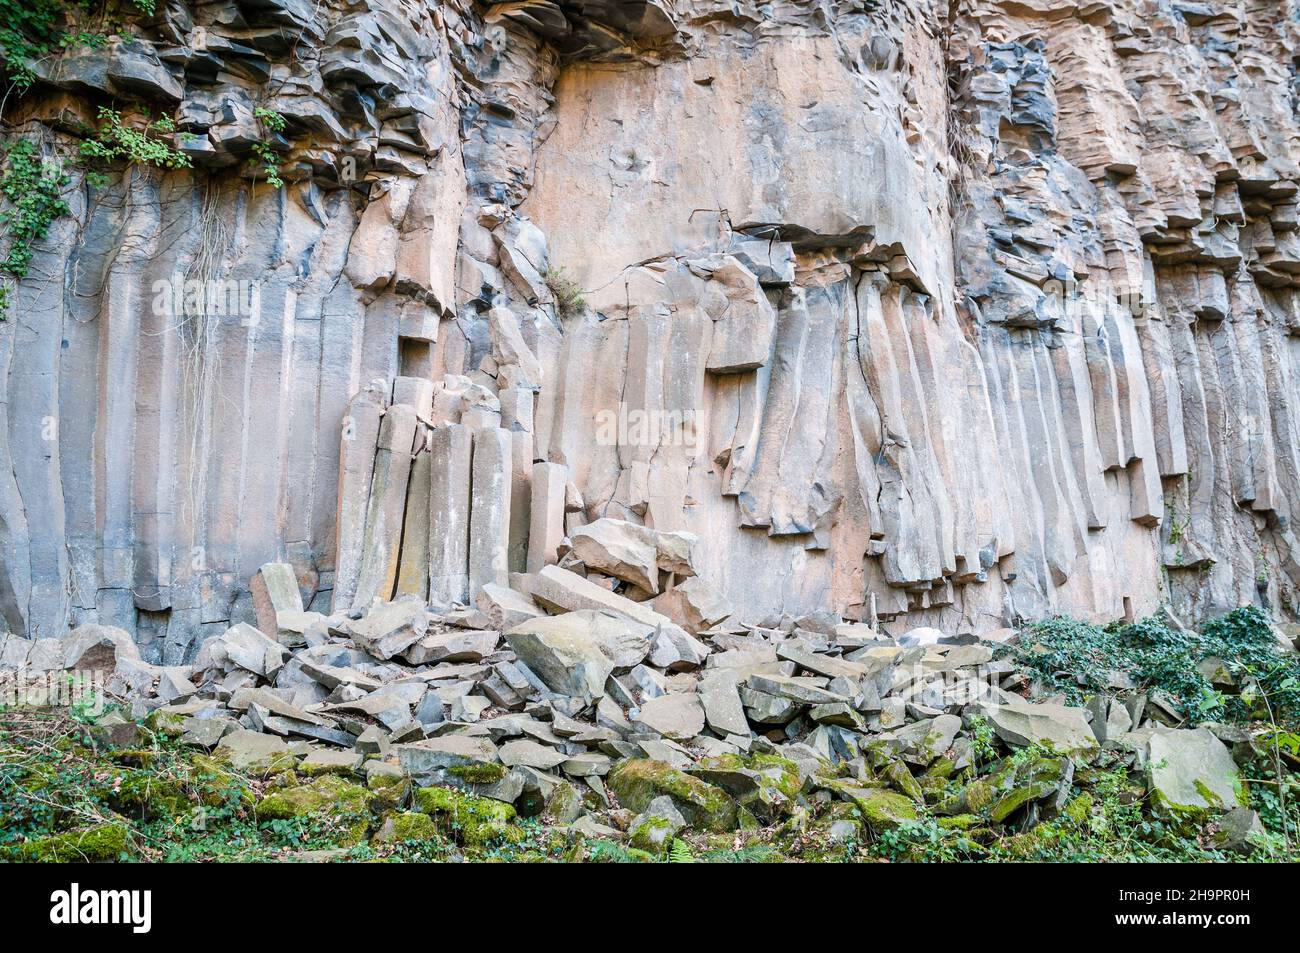 vertical lava columns, old lava flow, basalt column, hexagonal shape, Sant Joan les Fonts, Garrotxa, Catalonia, Spain Stock Photo